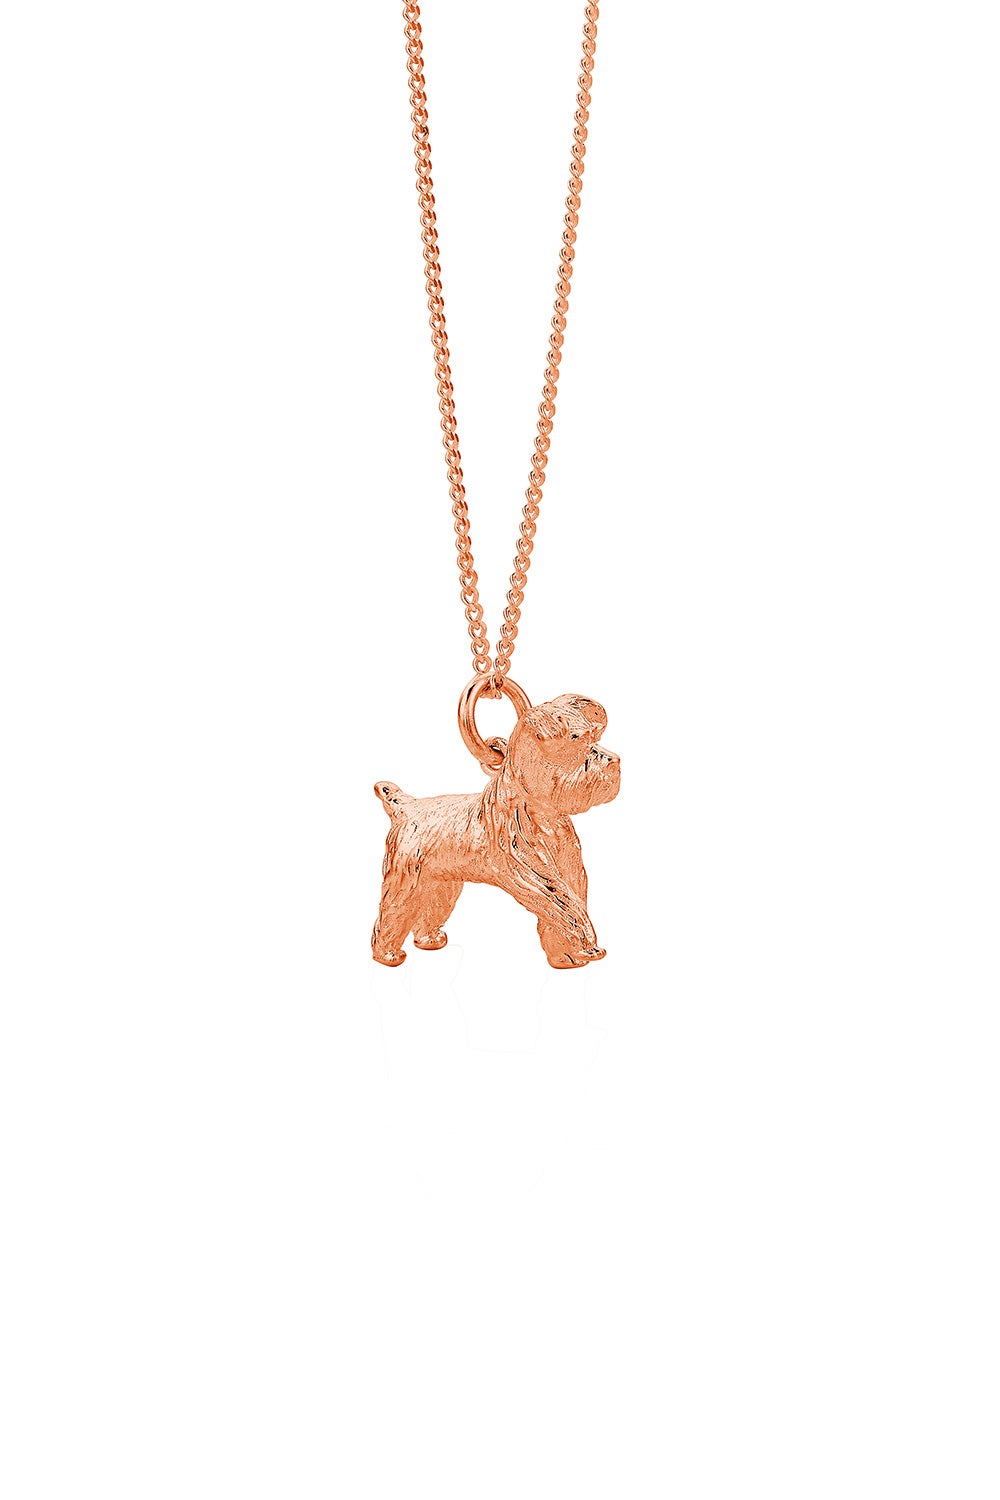 Rhinestone Chain Dog Collar Luxury Bling Pet Puppy Cuban Link Necklace  Jewelry | eBay